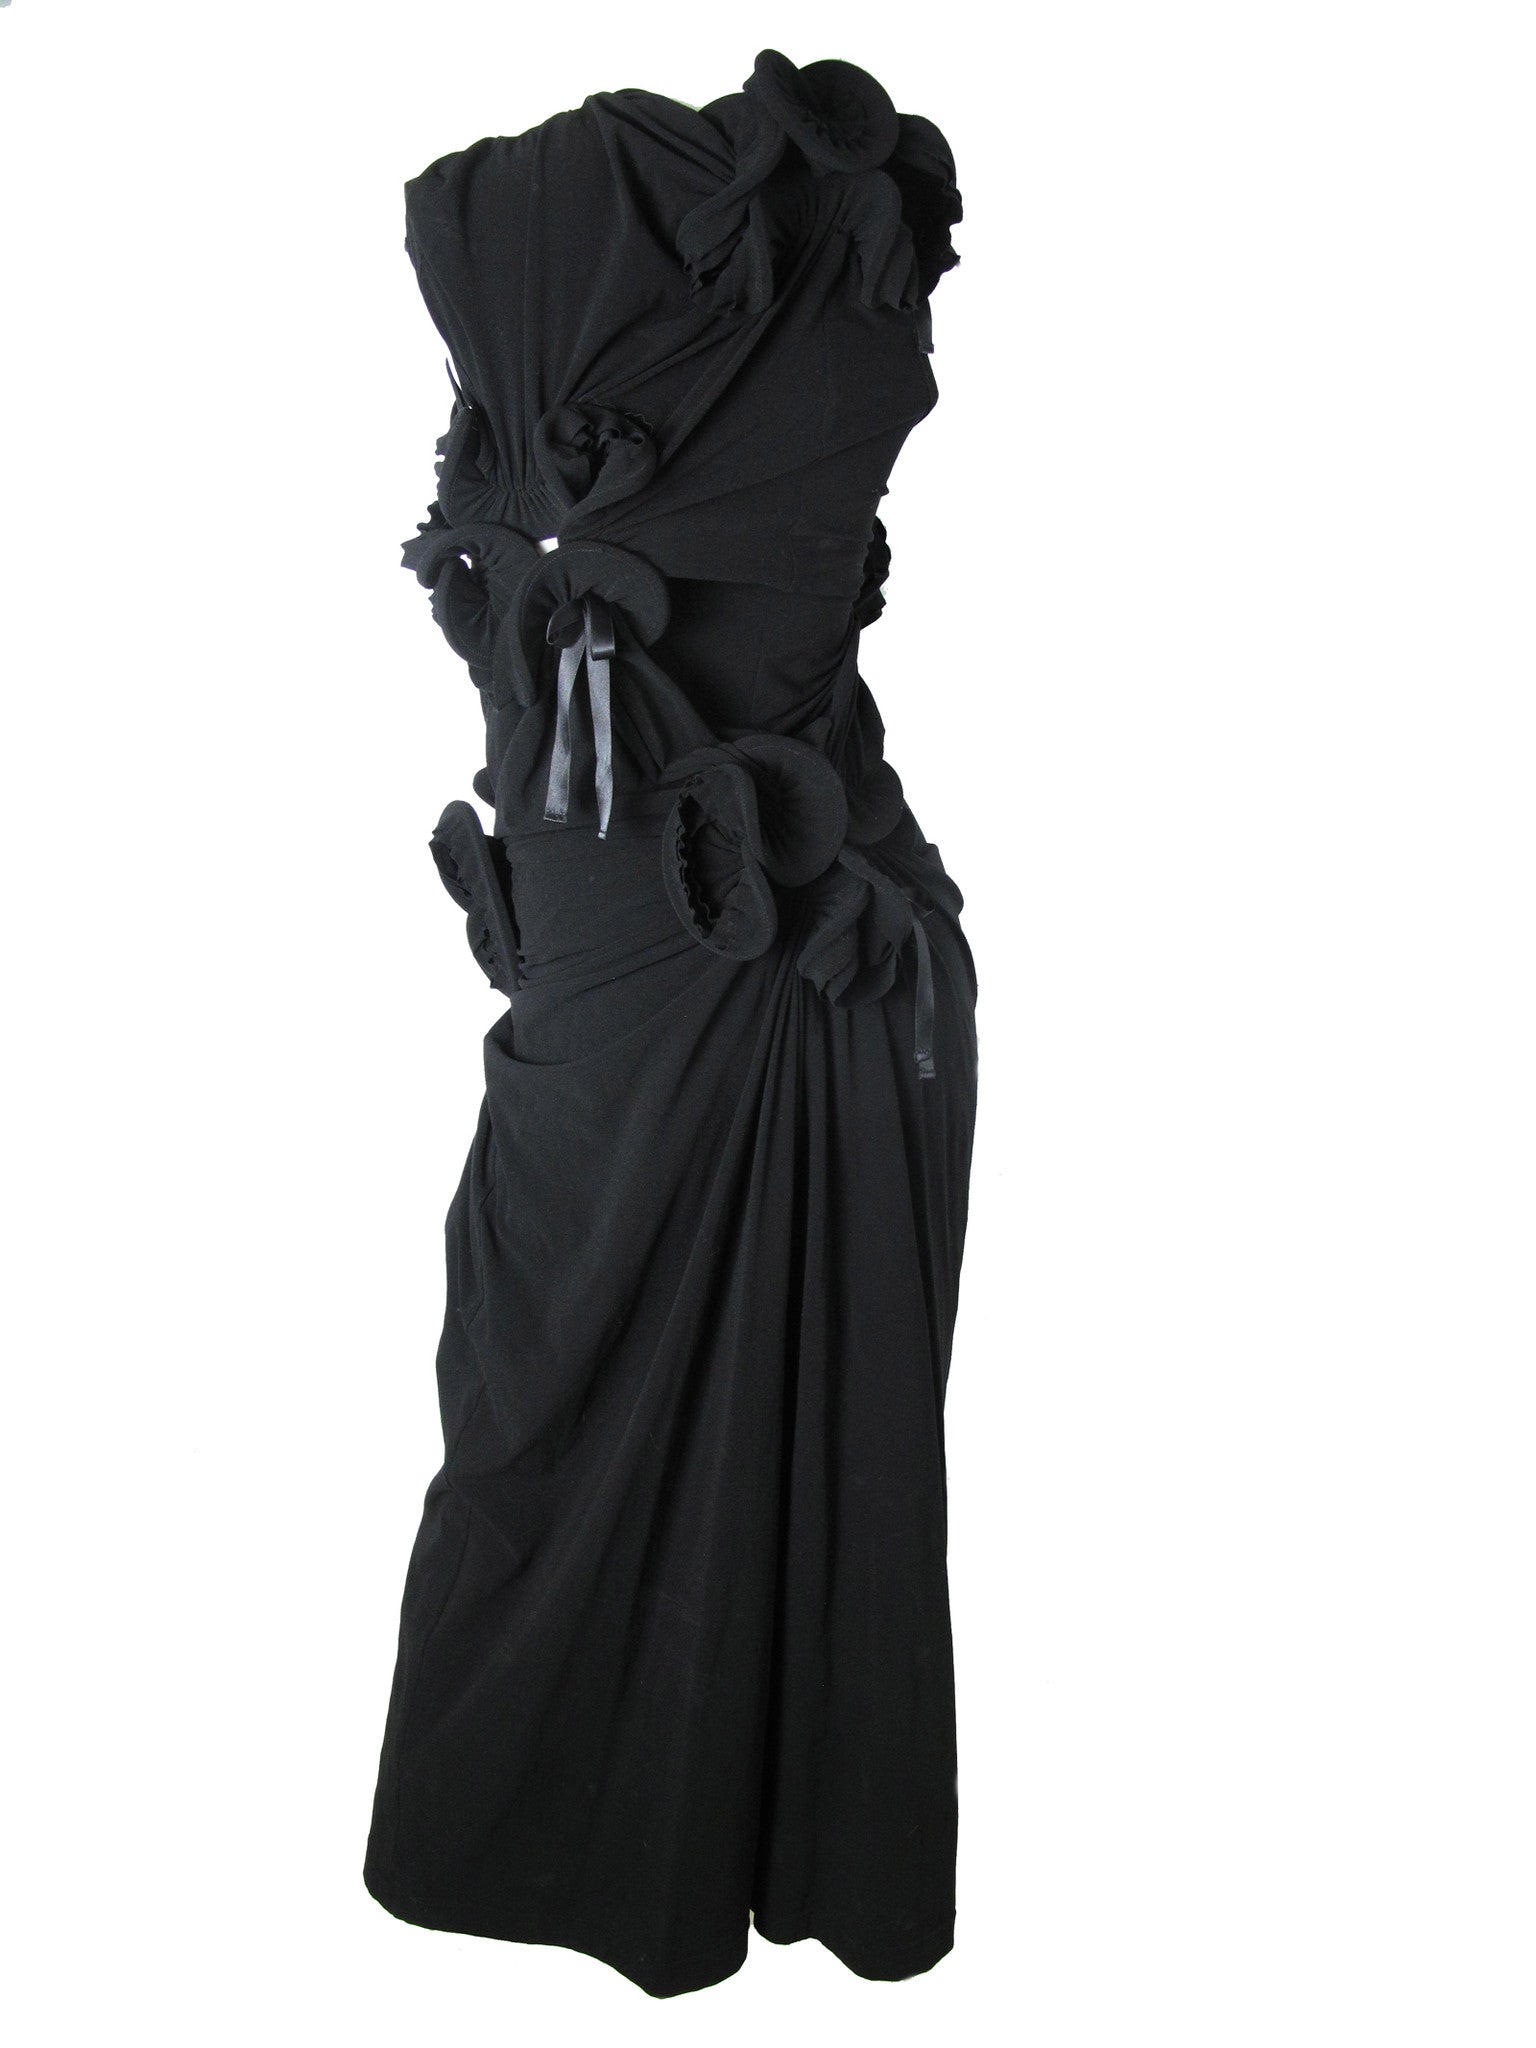 COMME de GARCONS knotted ring dress c. 2007 – ARCHIVE